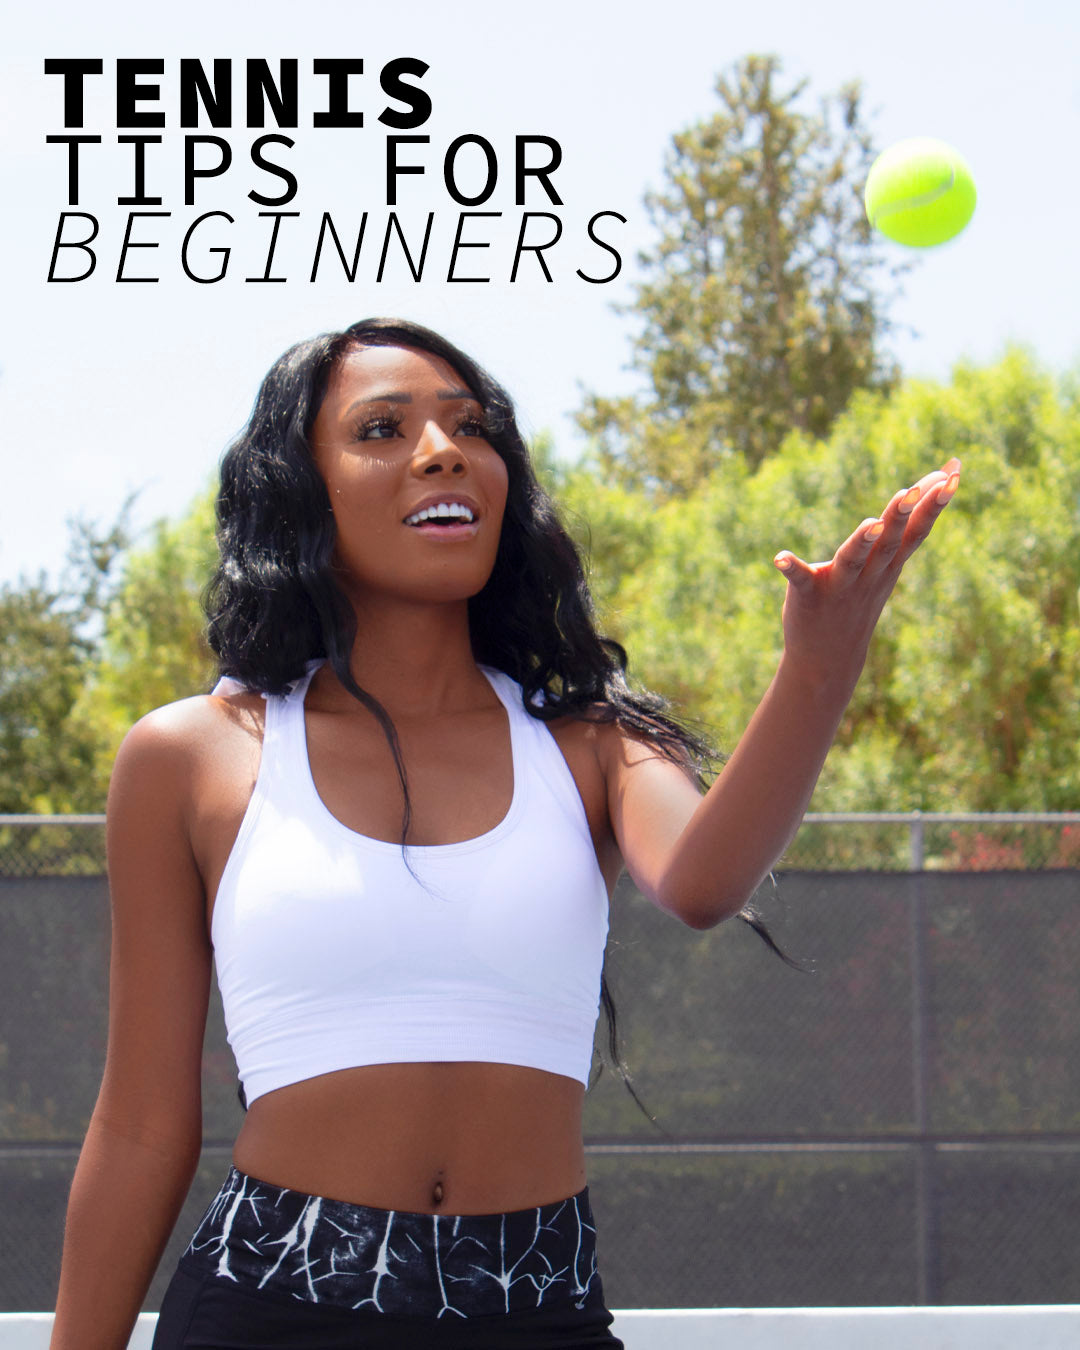 Tennis Tips for Beginners